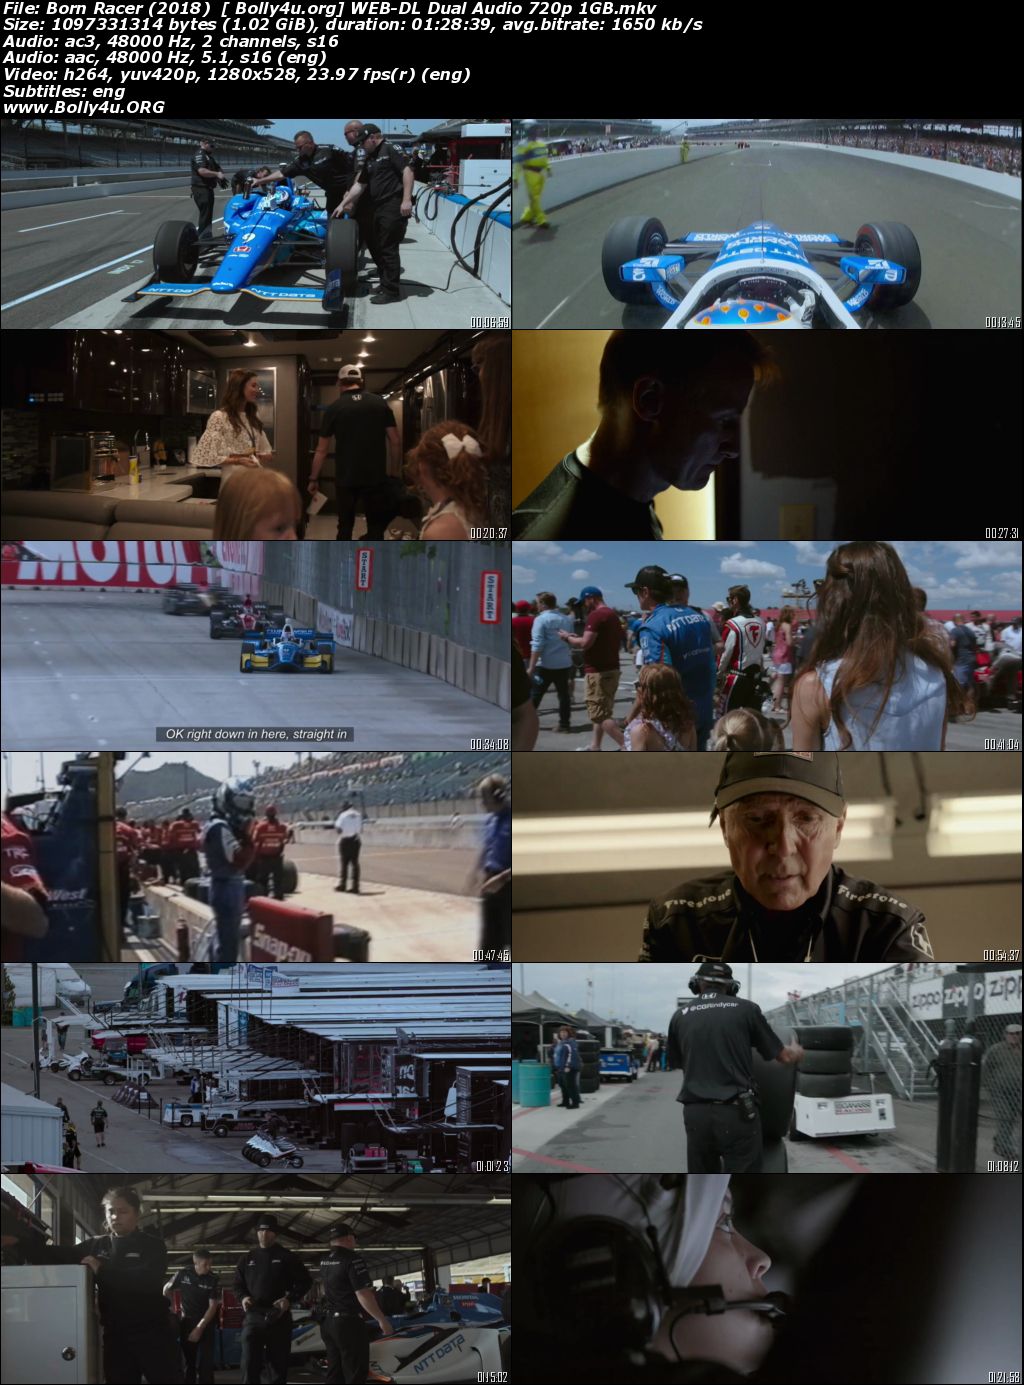 Born Racer 2018 WEB-DL Hindi Dual Audio Full Movie Download 720p 480p